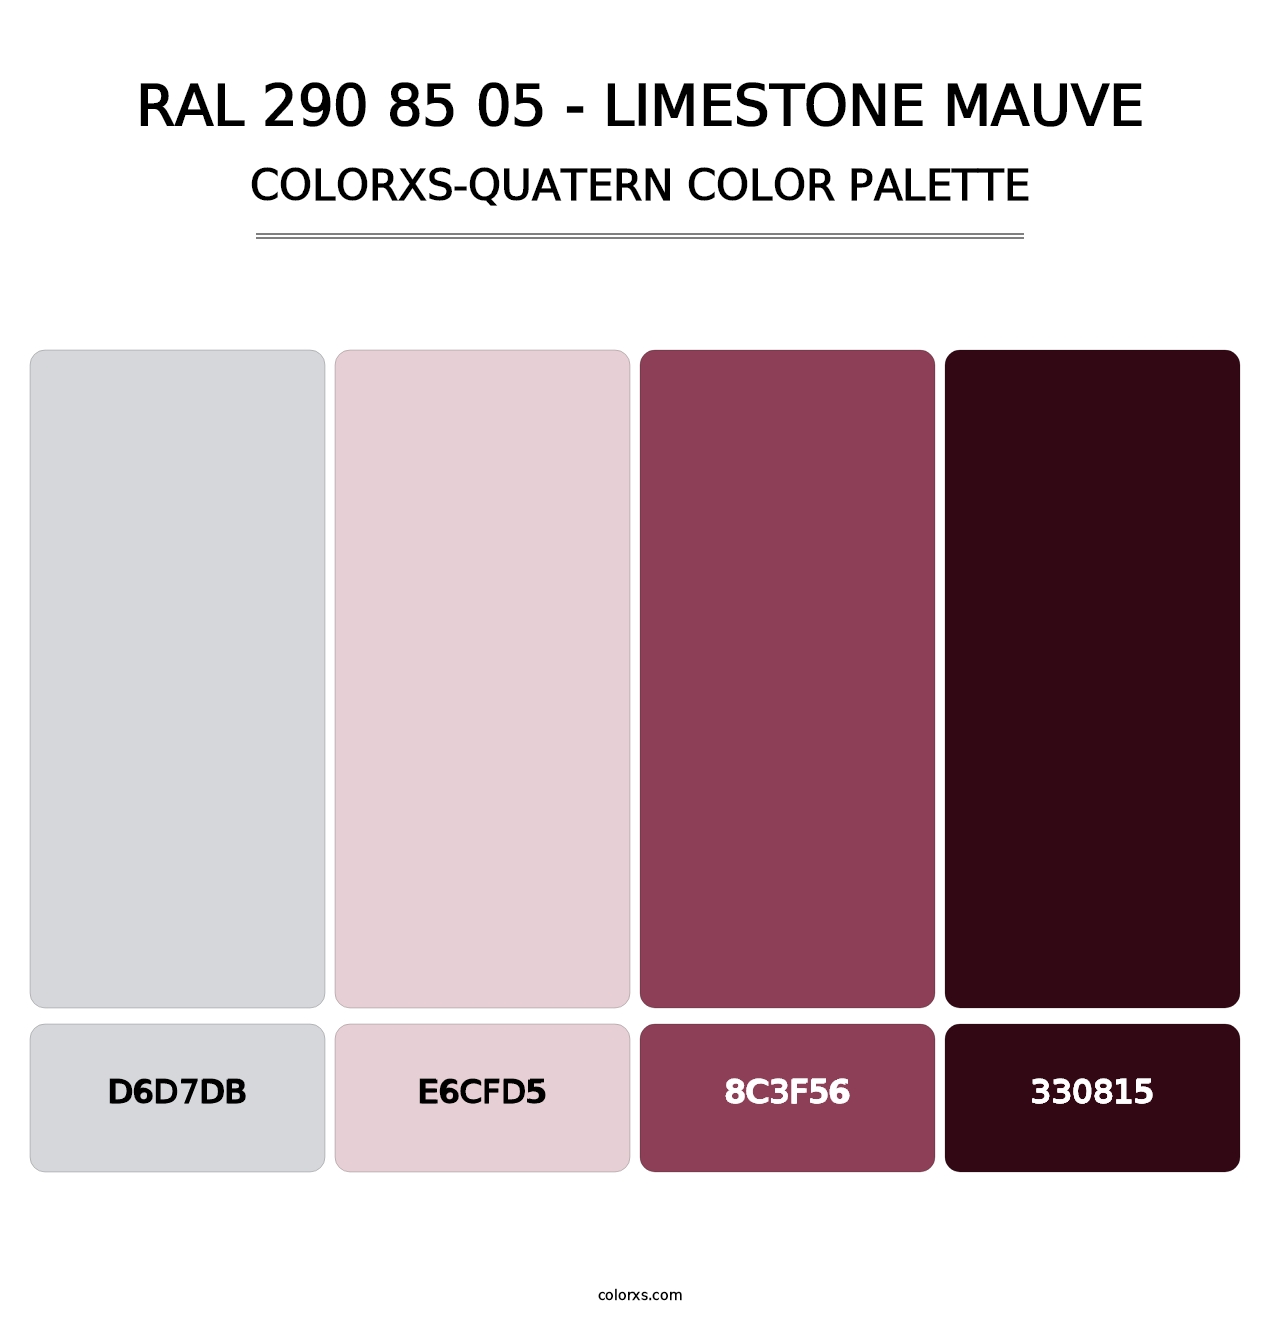 RAL 290 85 05 - Limestone Mauve - Colorxs Quatern Palette